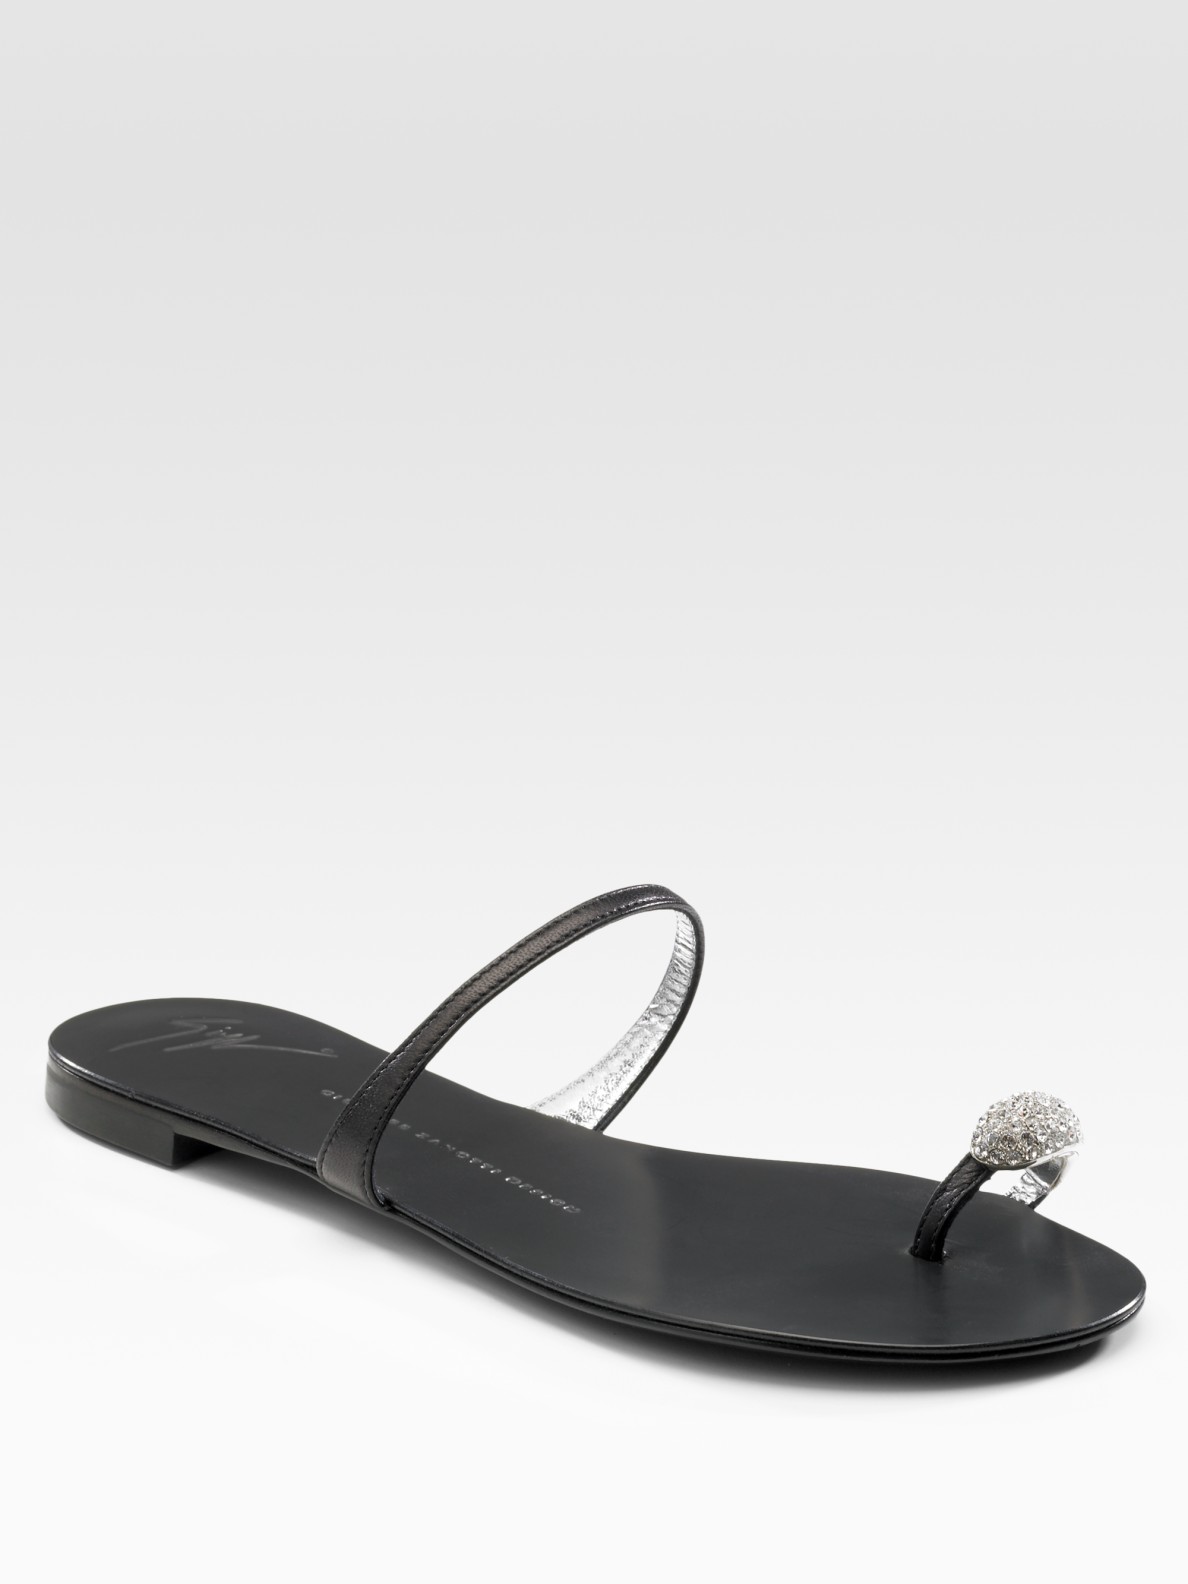 Lyst - Giuseppe Zanotti Jeweled Toe-ring Sandals in Black